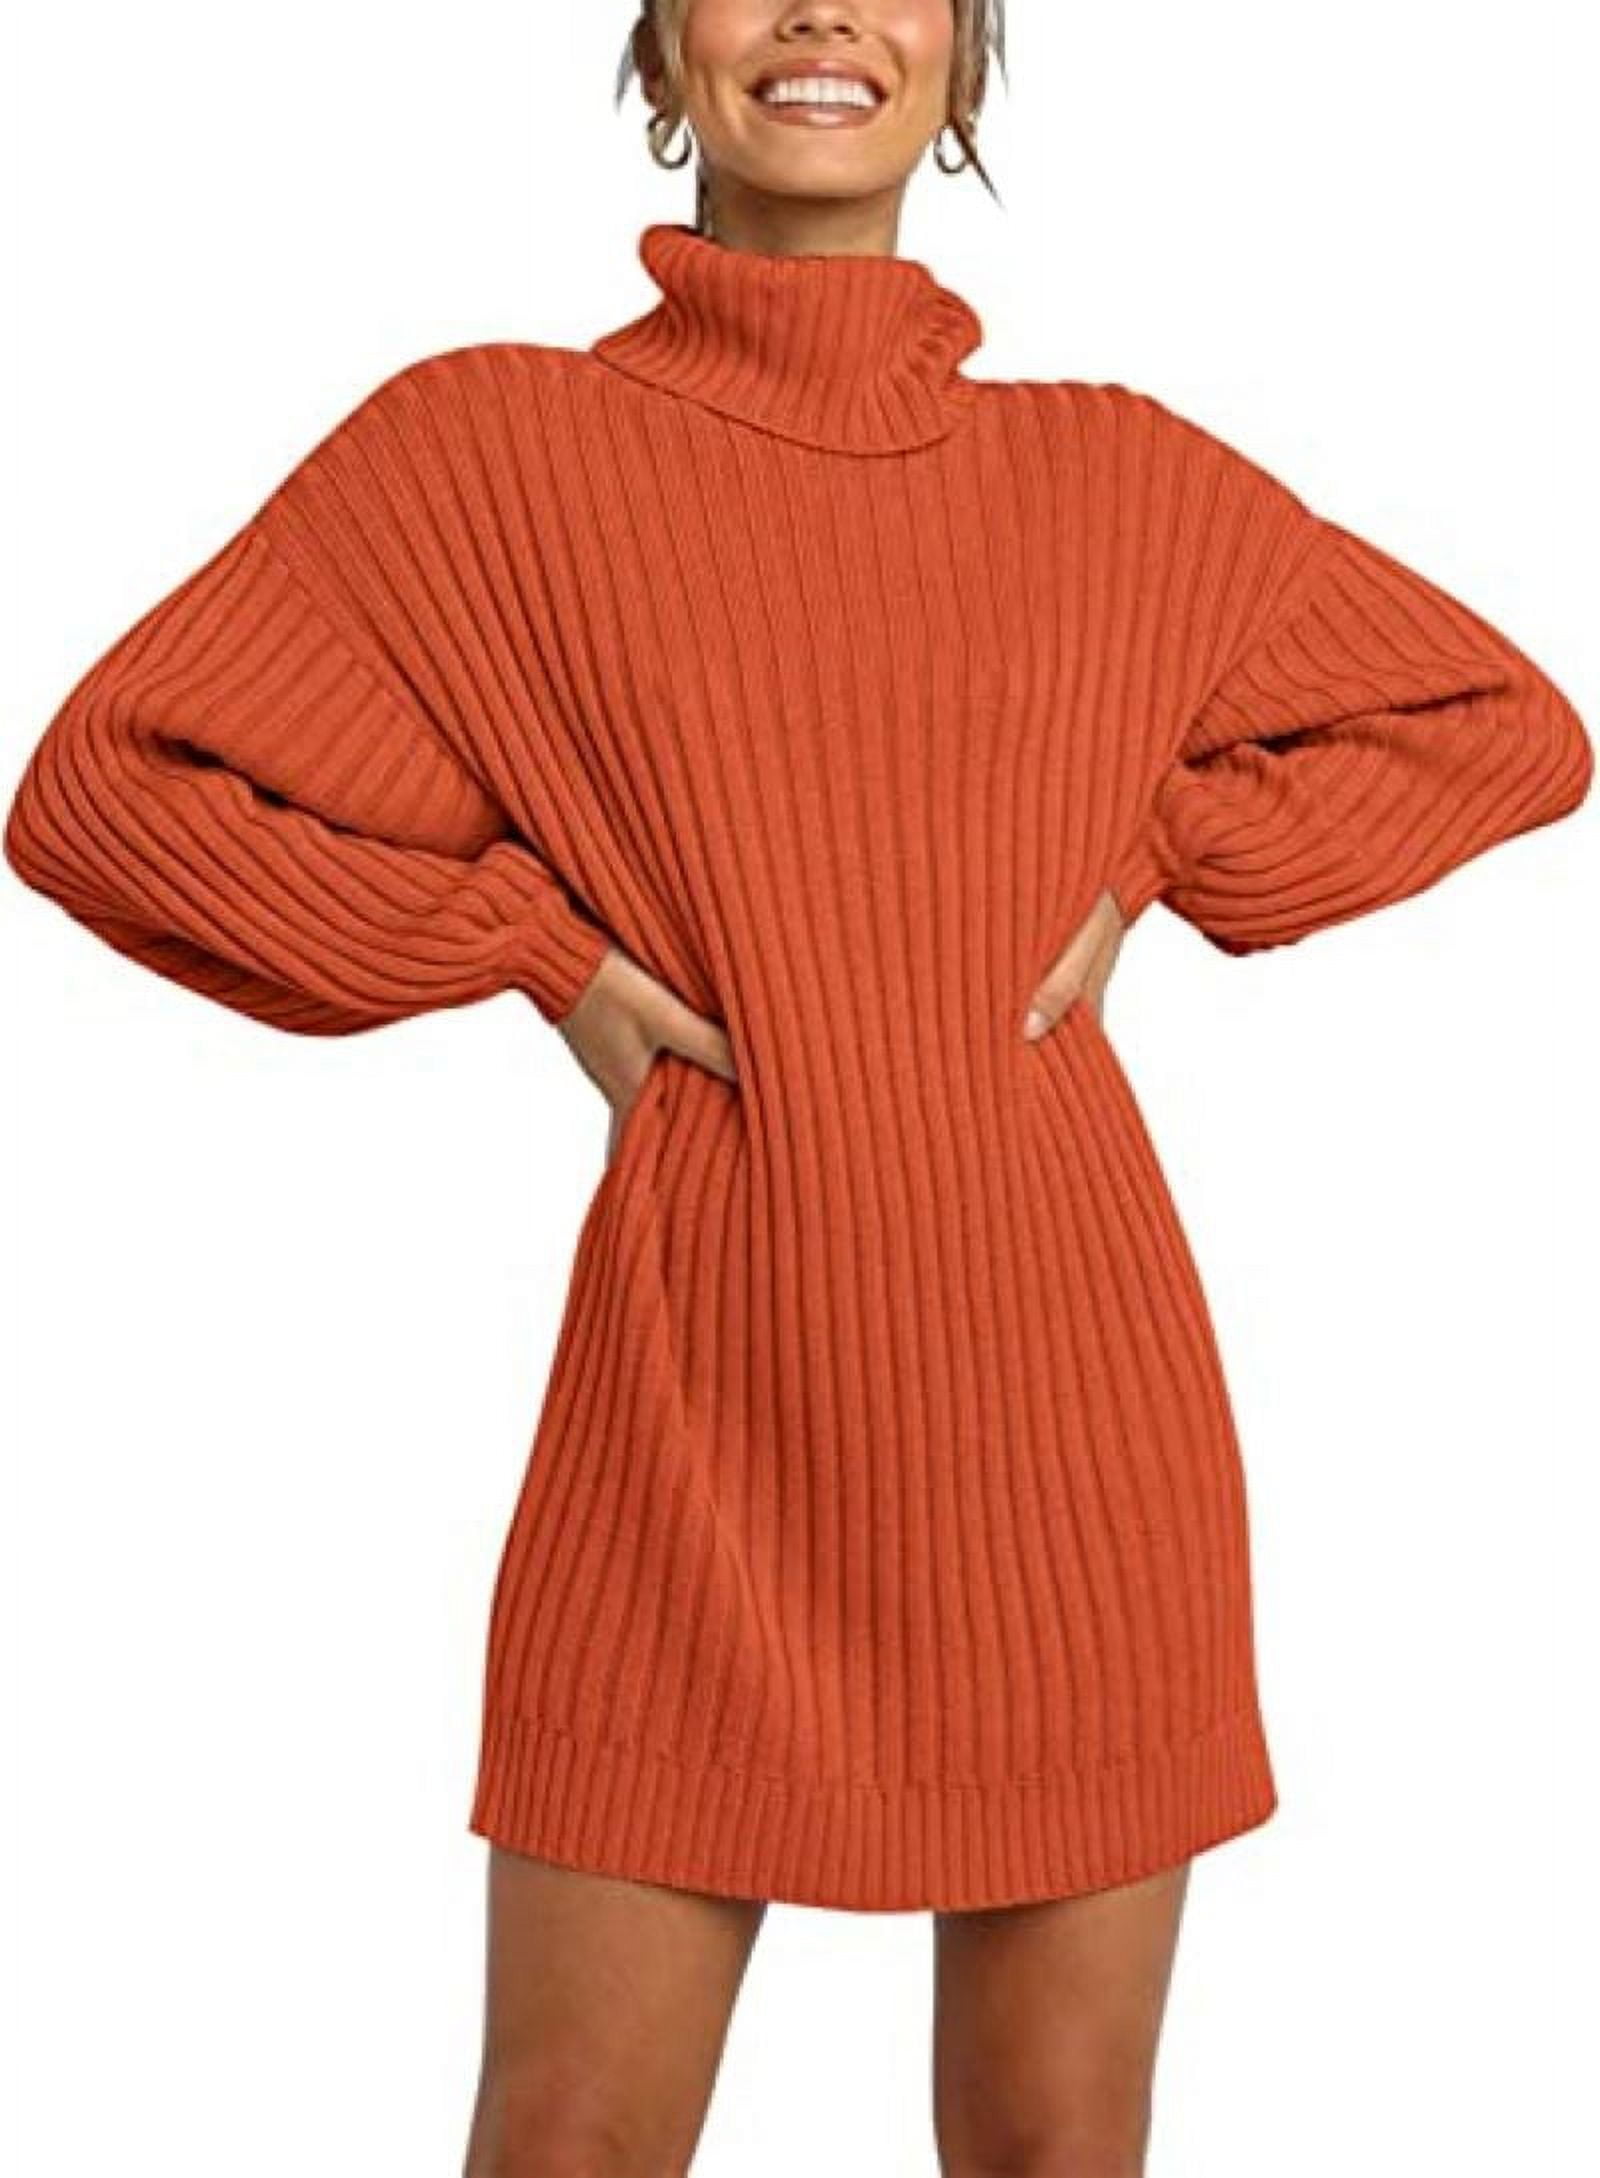 jumper dress for women